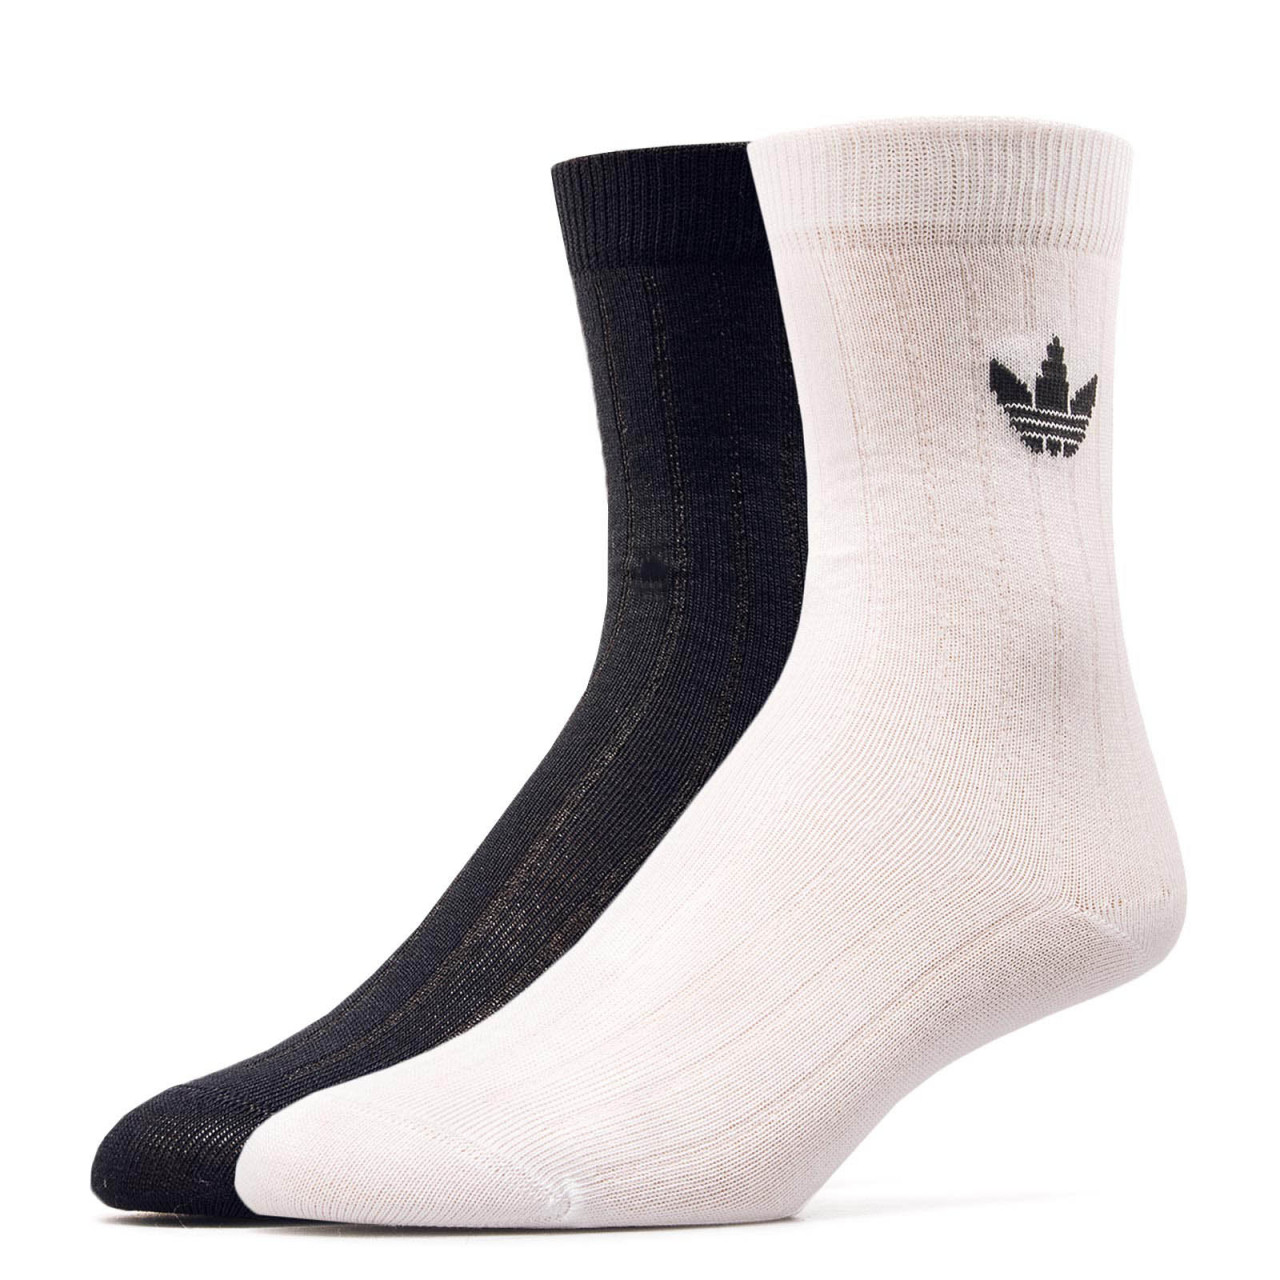 Adidas Socks 2Pk Thin Tref Black White